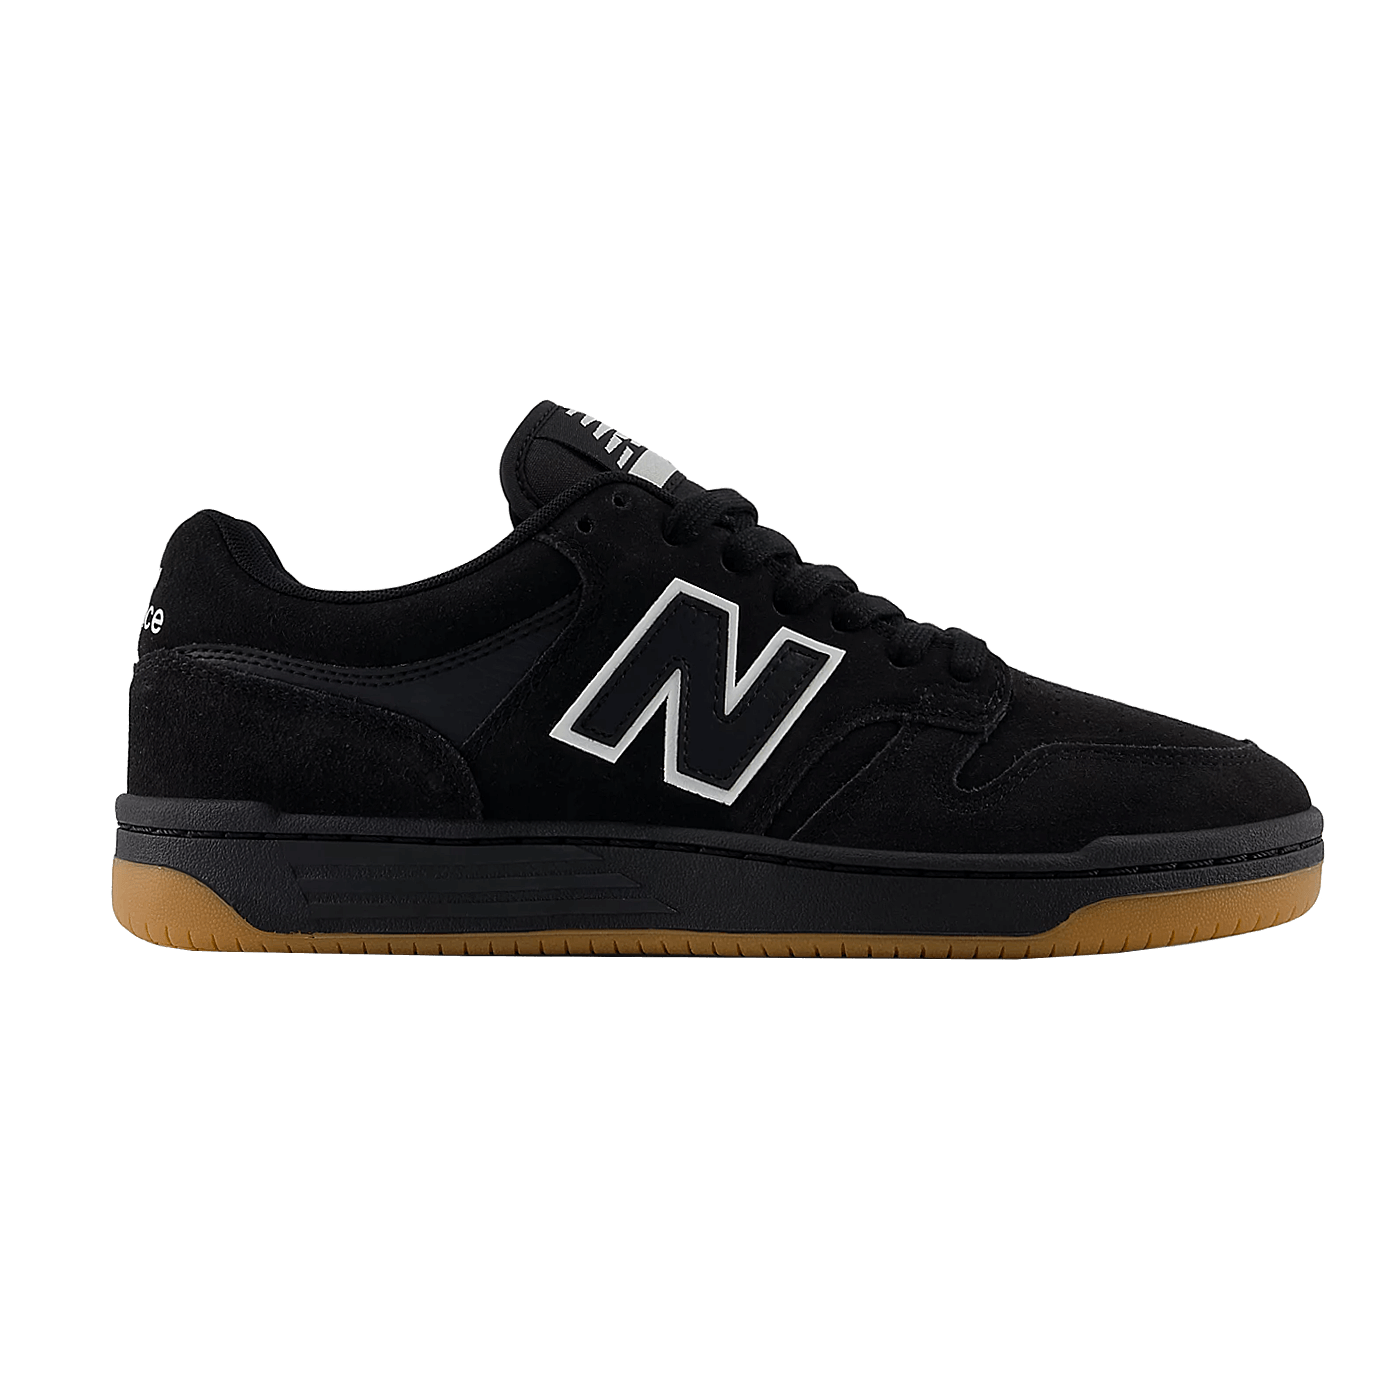 New Balance Numeric Skate Shoe Black Gum Suede NM480SBG